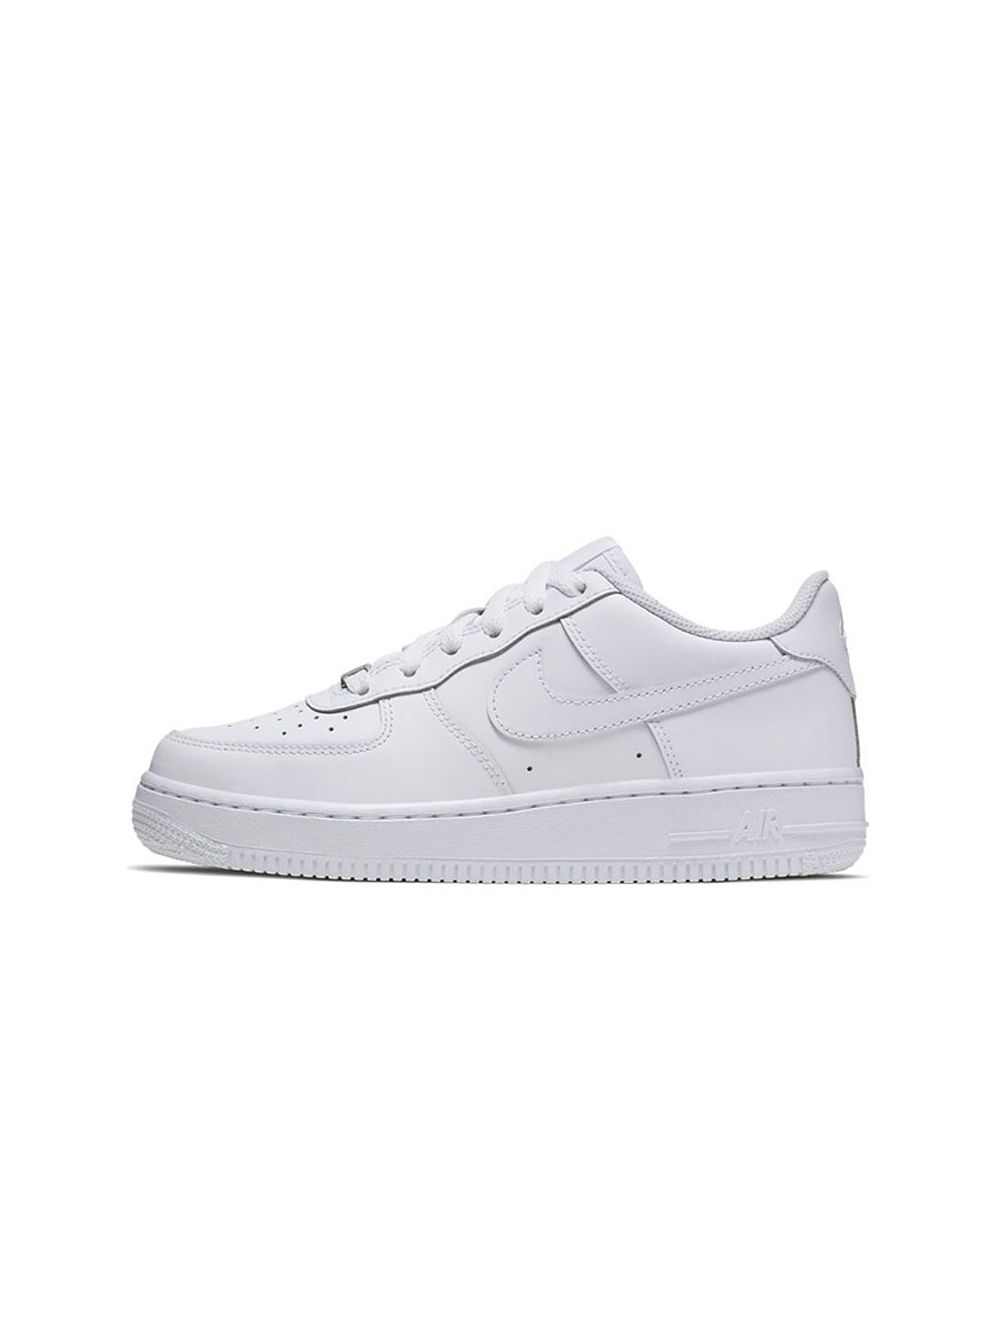 Shop Nike Air Force 1 GS Youth Shoe White | Studio 88